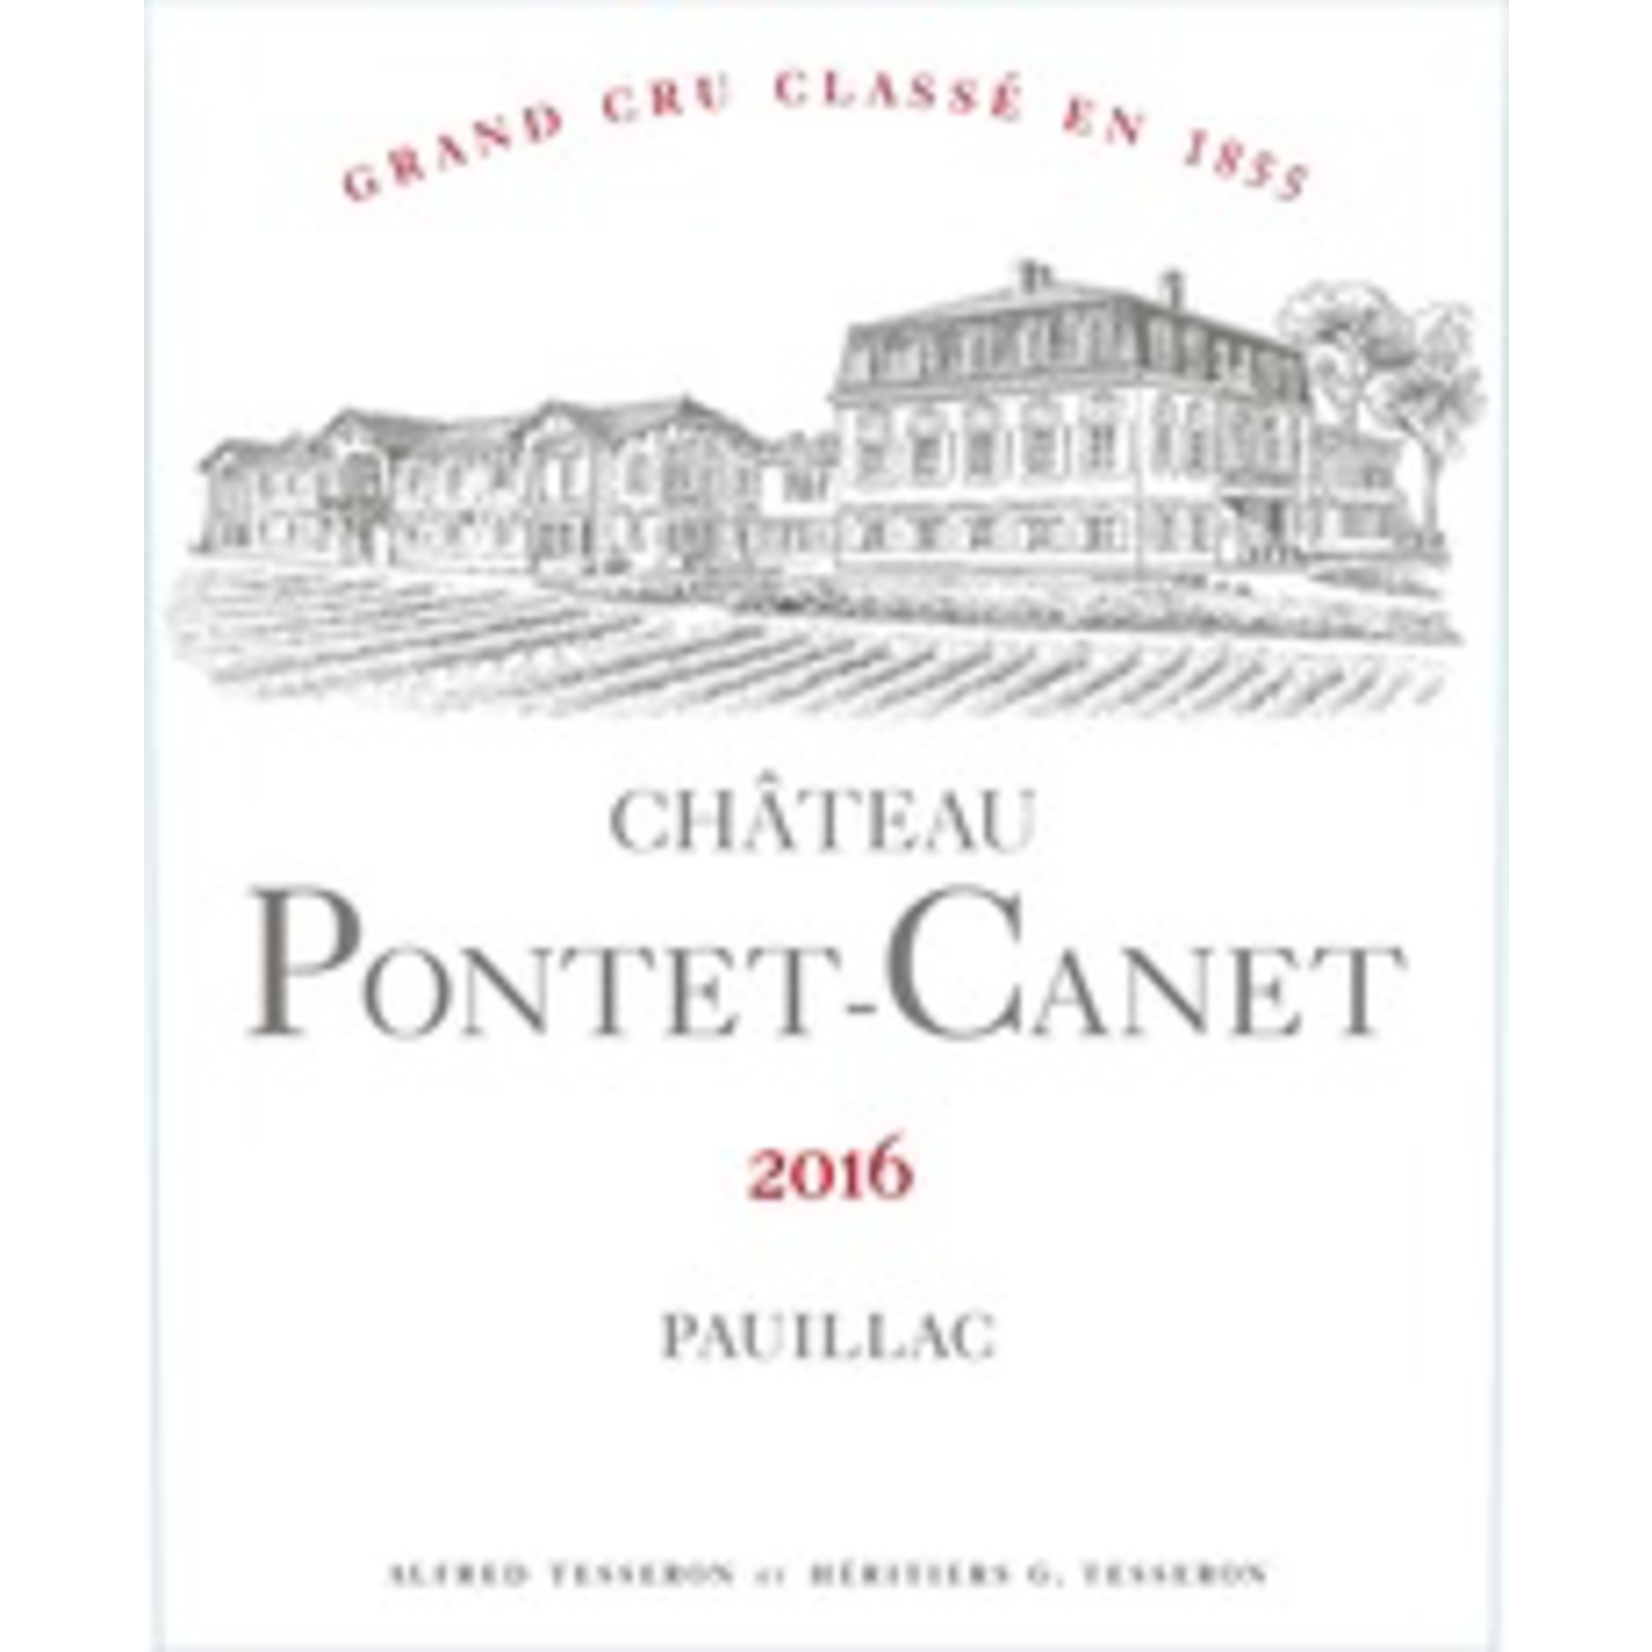 Wine Chateau Pontet Canet Pauillac 2016